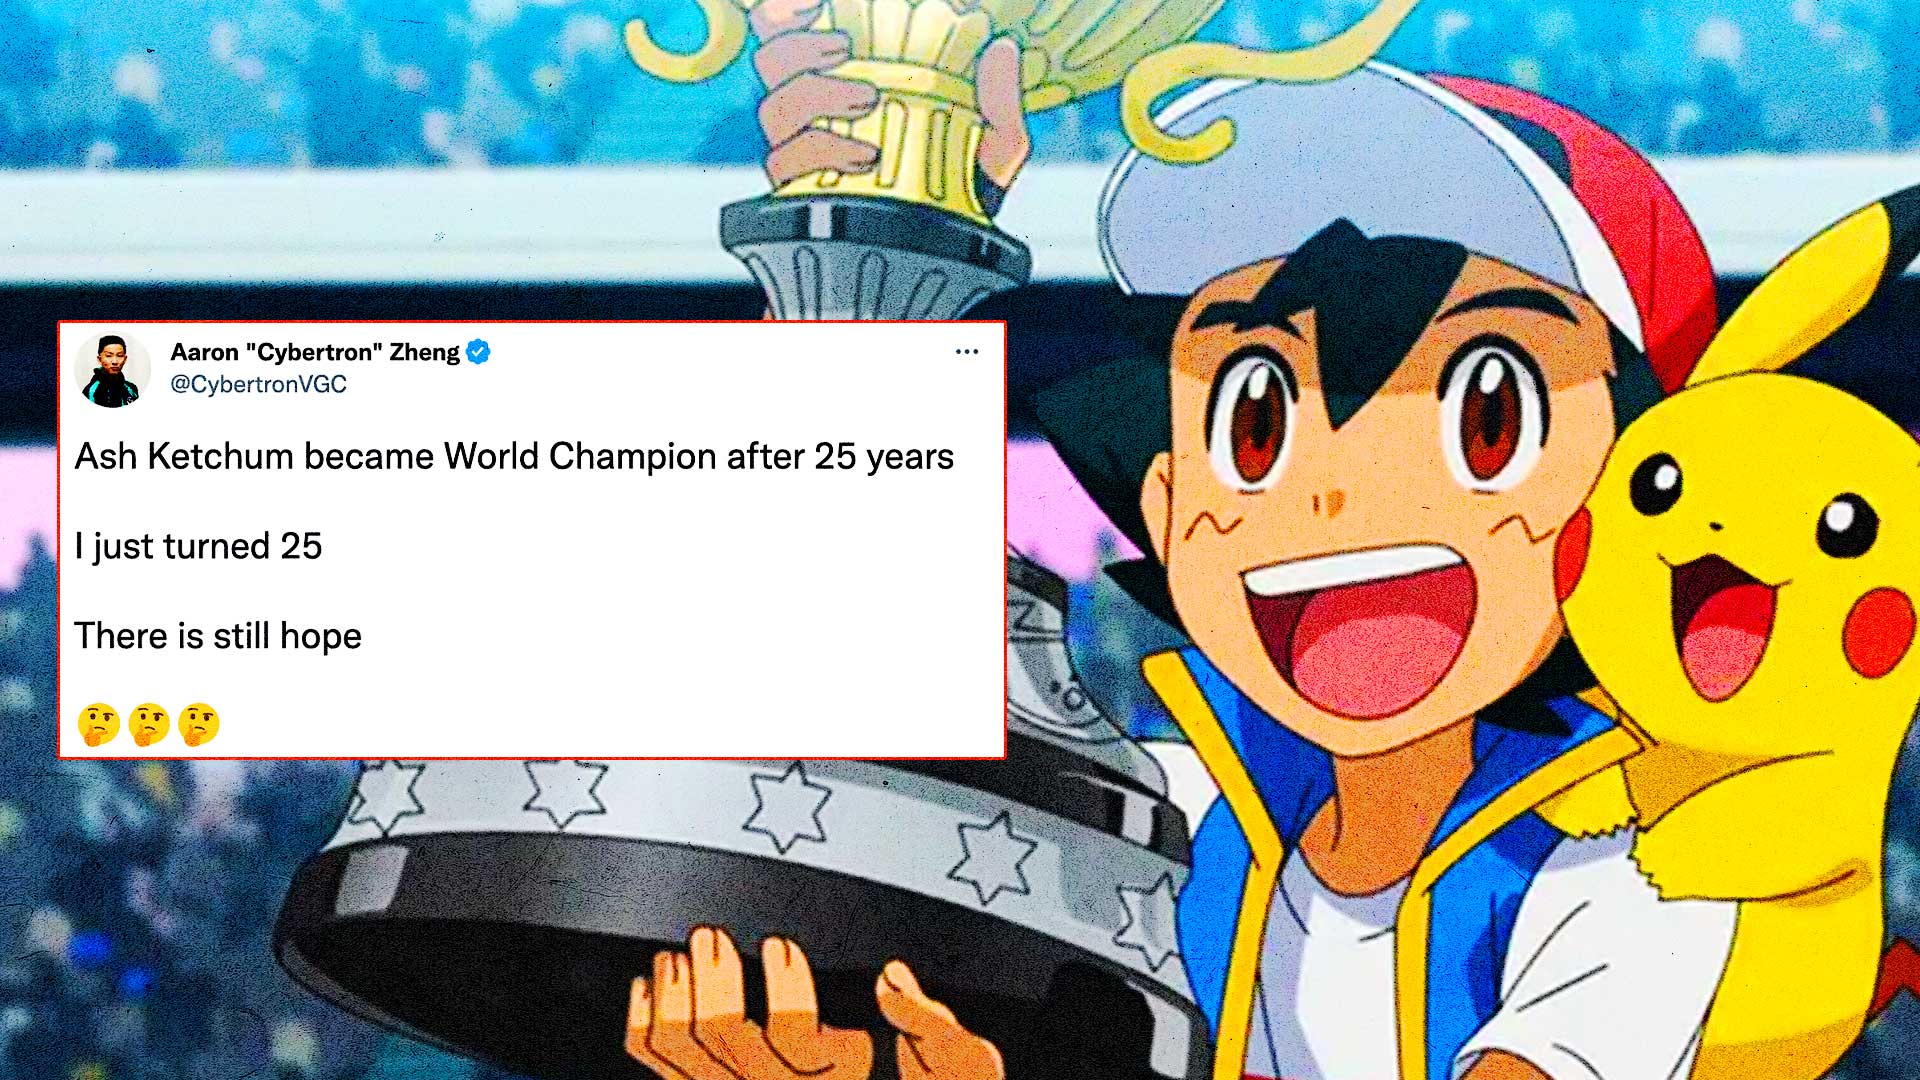 Ash's Strongest Pokémon In The Anime